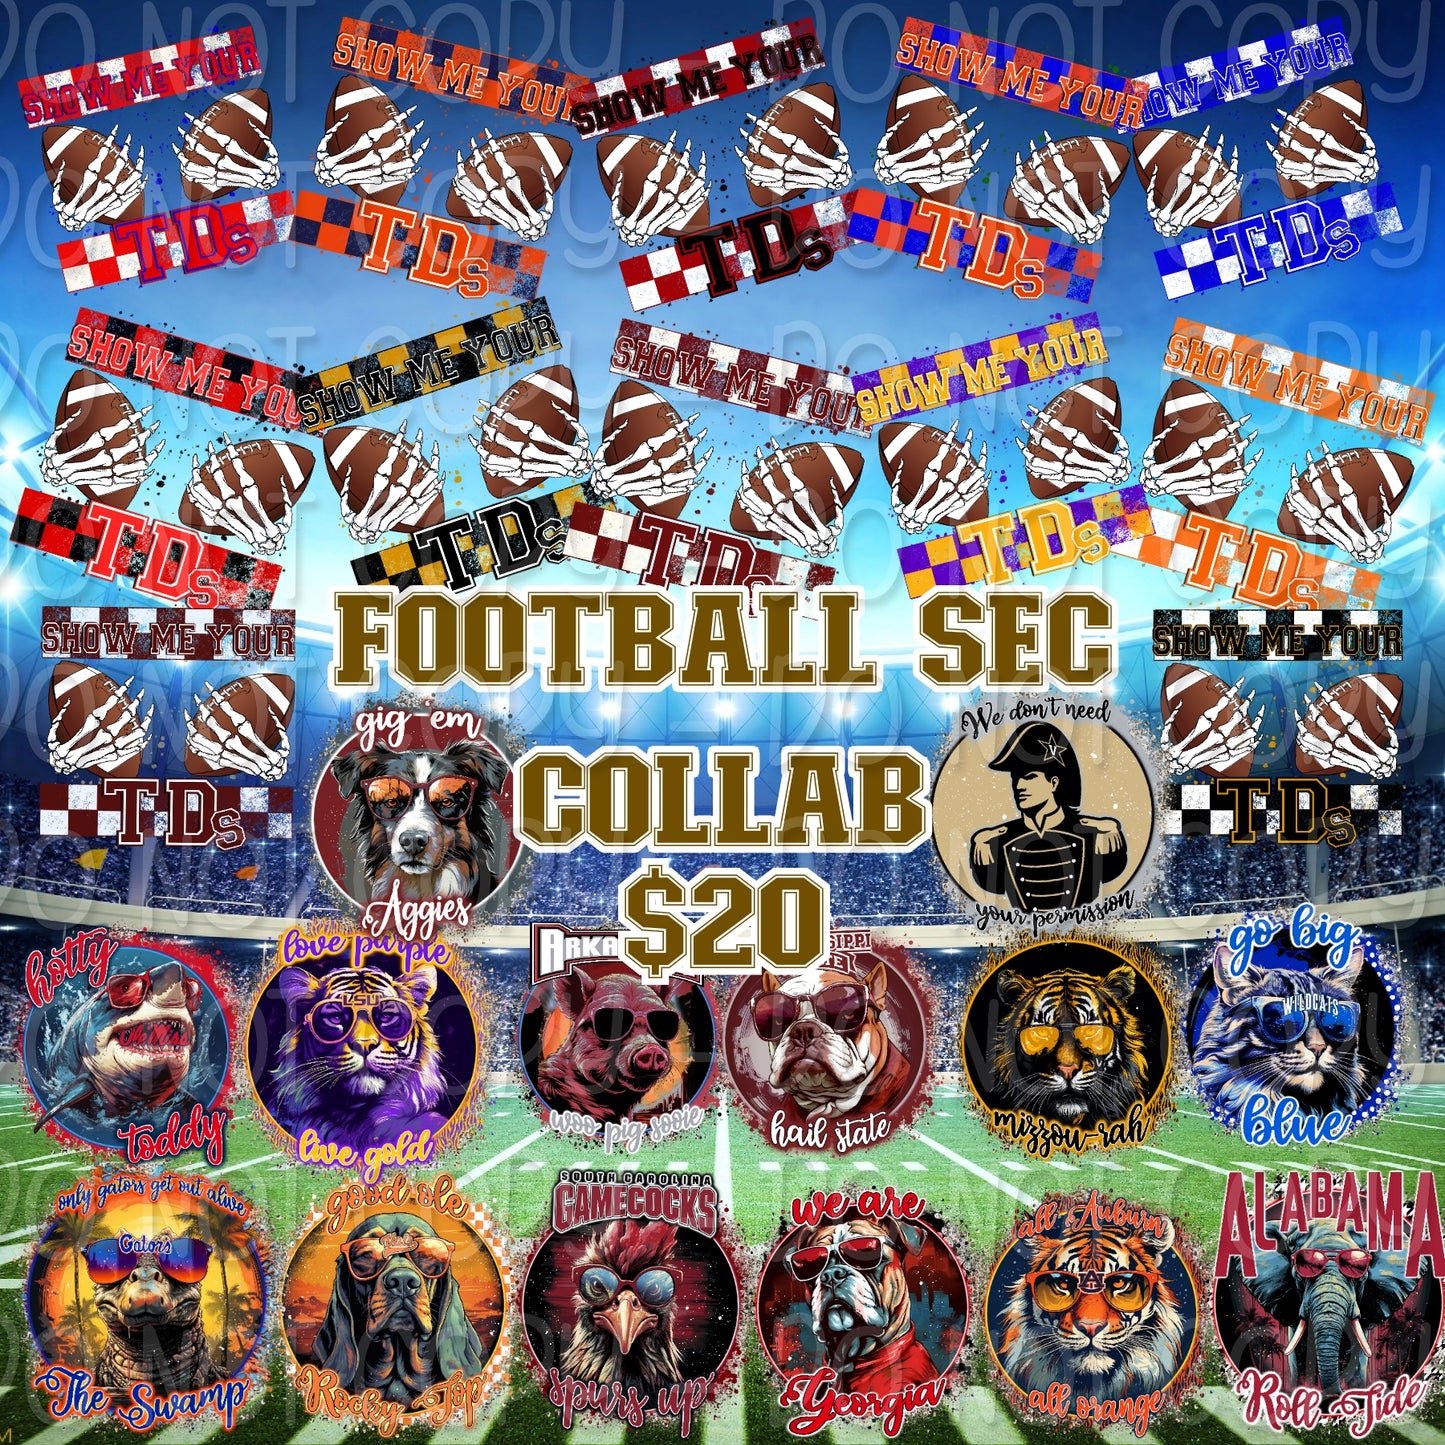 Football SEC Collab